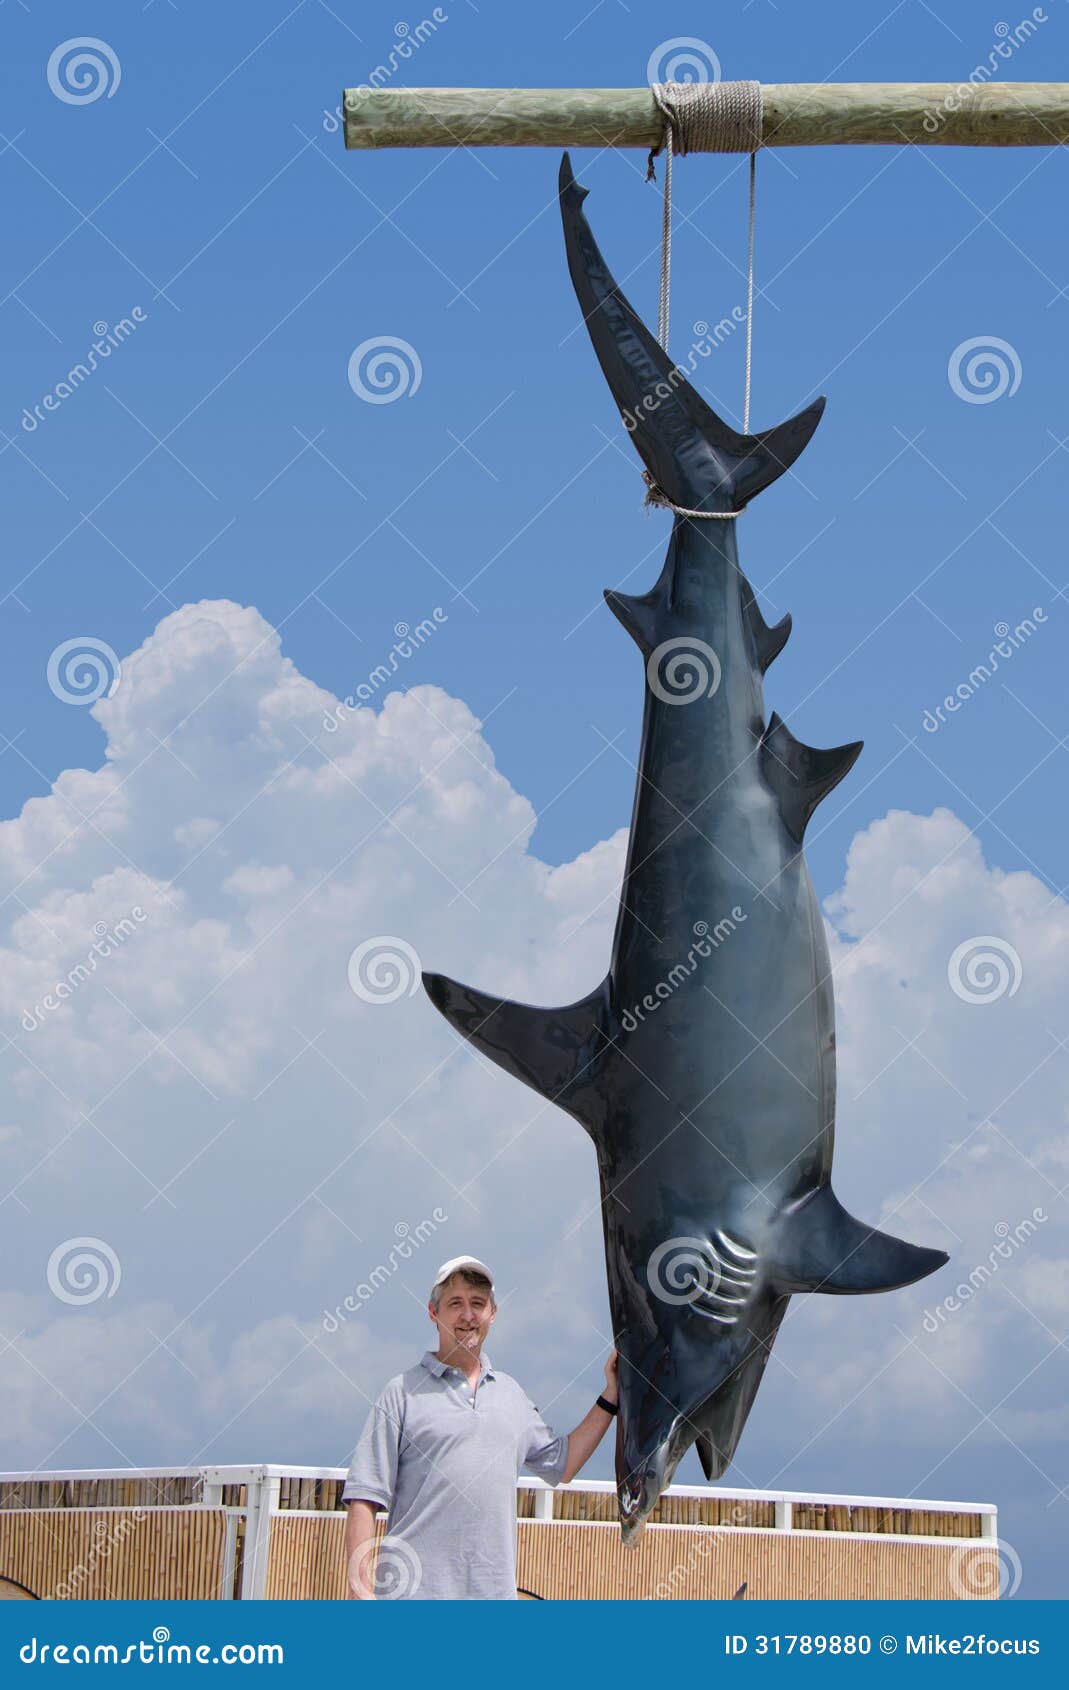 417 Fisherman Shark Stock Photos - Free & Royalty-Free Stock Photos from  Dreamstime